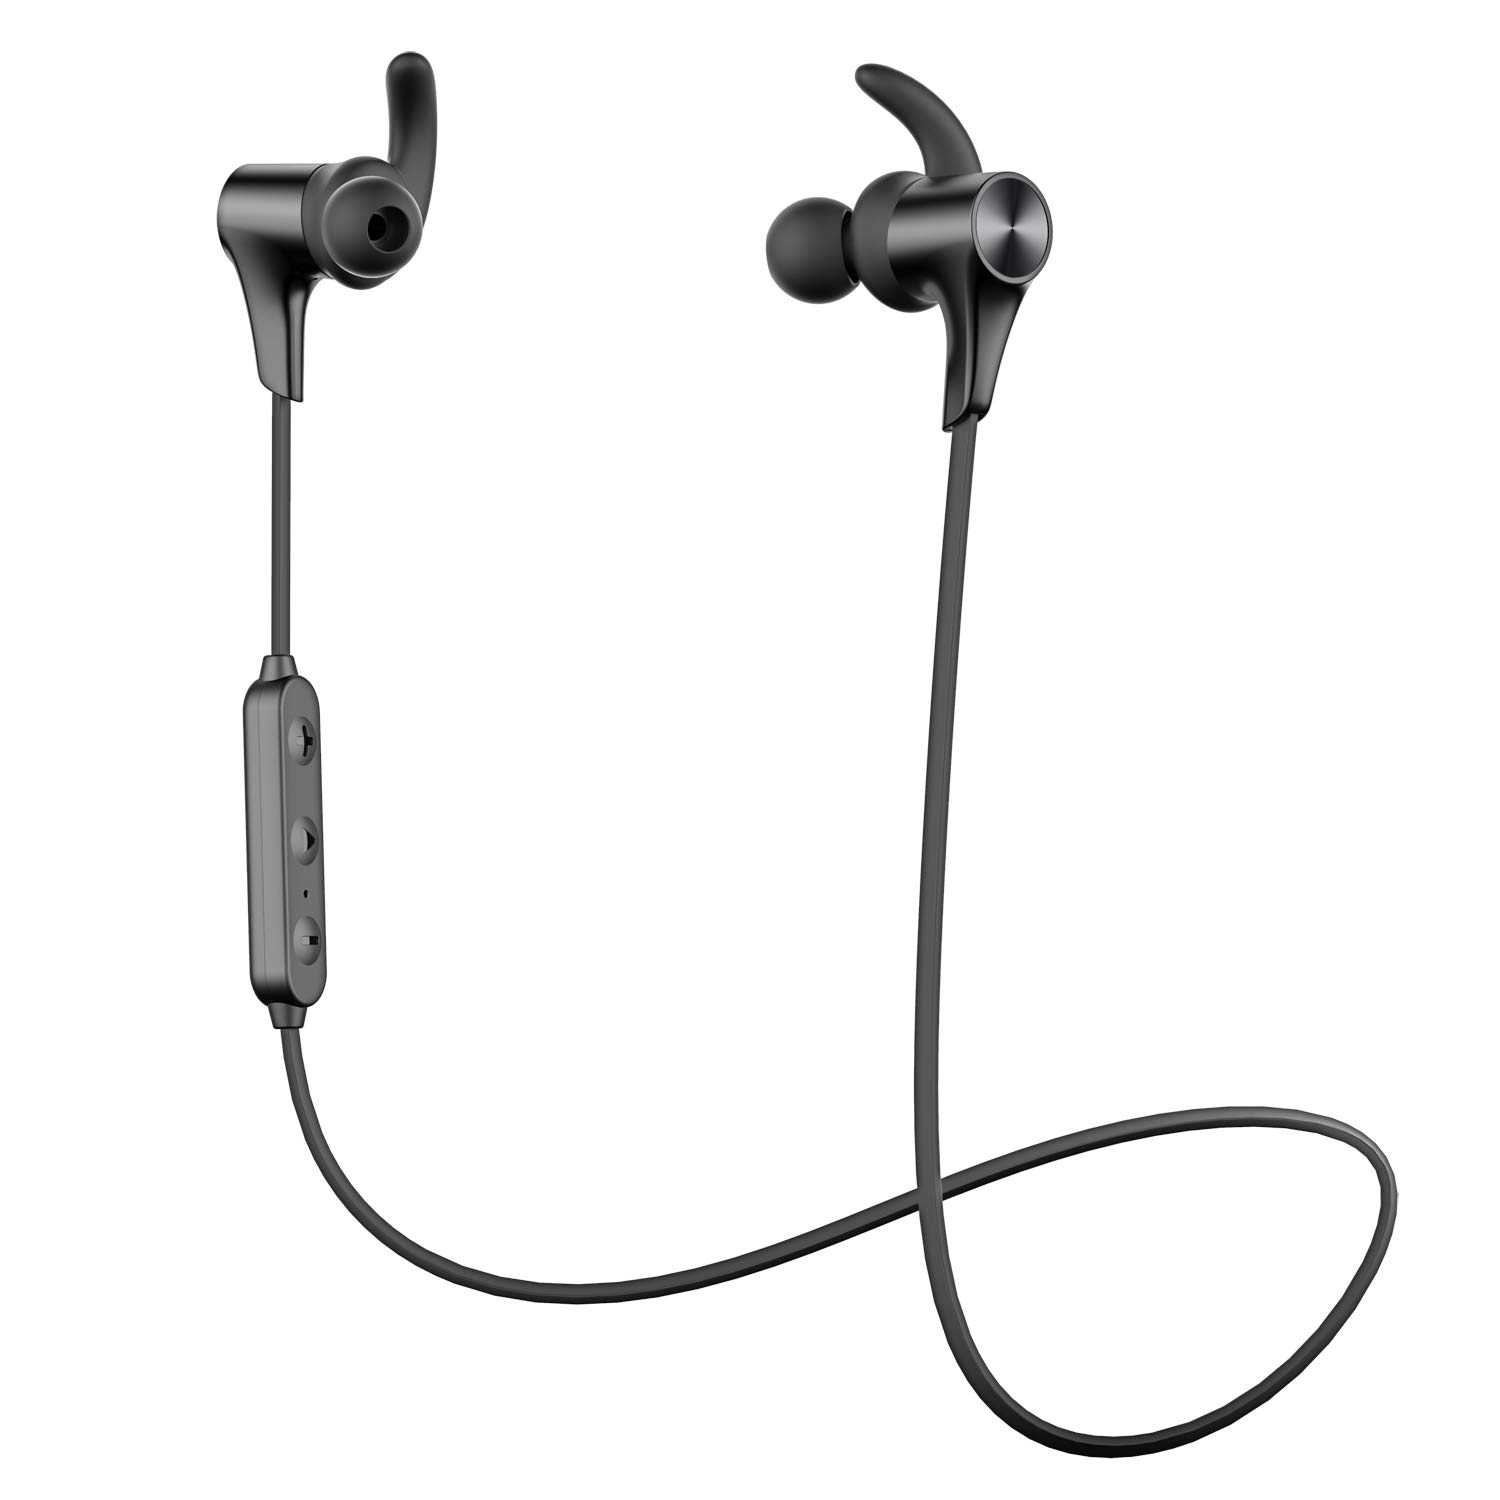 Soundpeats Q12HD Bluetooth Wireless Earphones User Manual